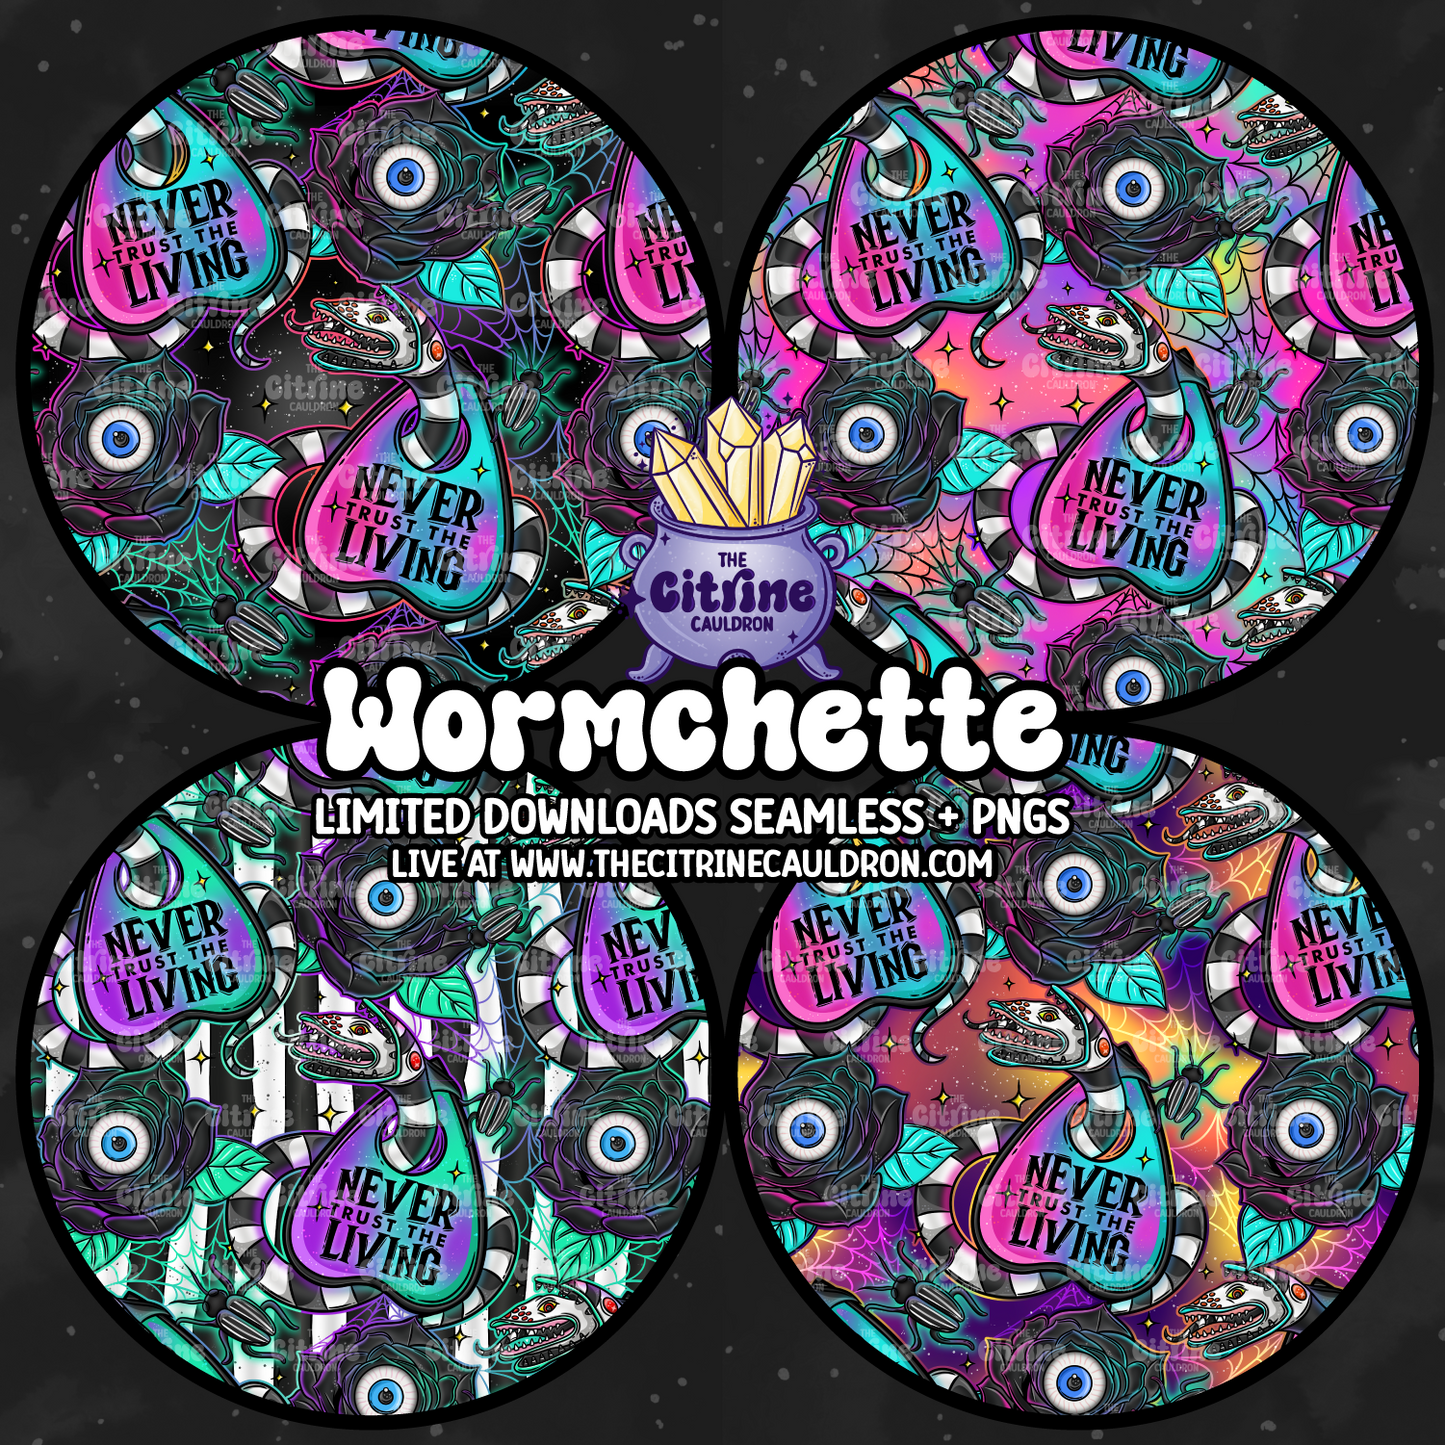 Wormchette - Seamless